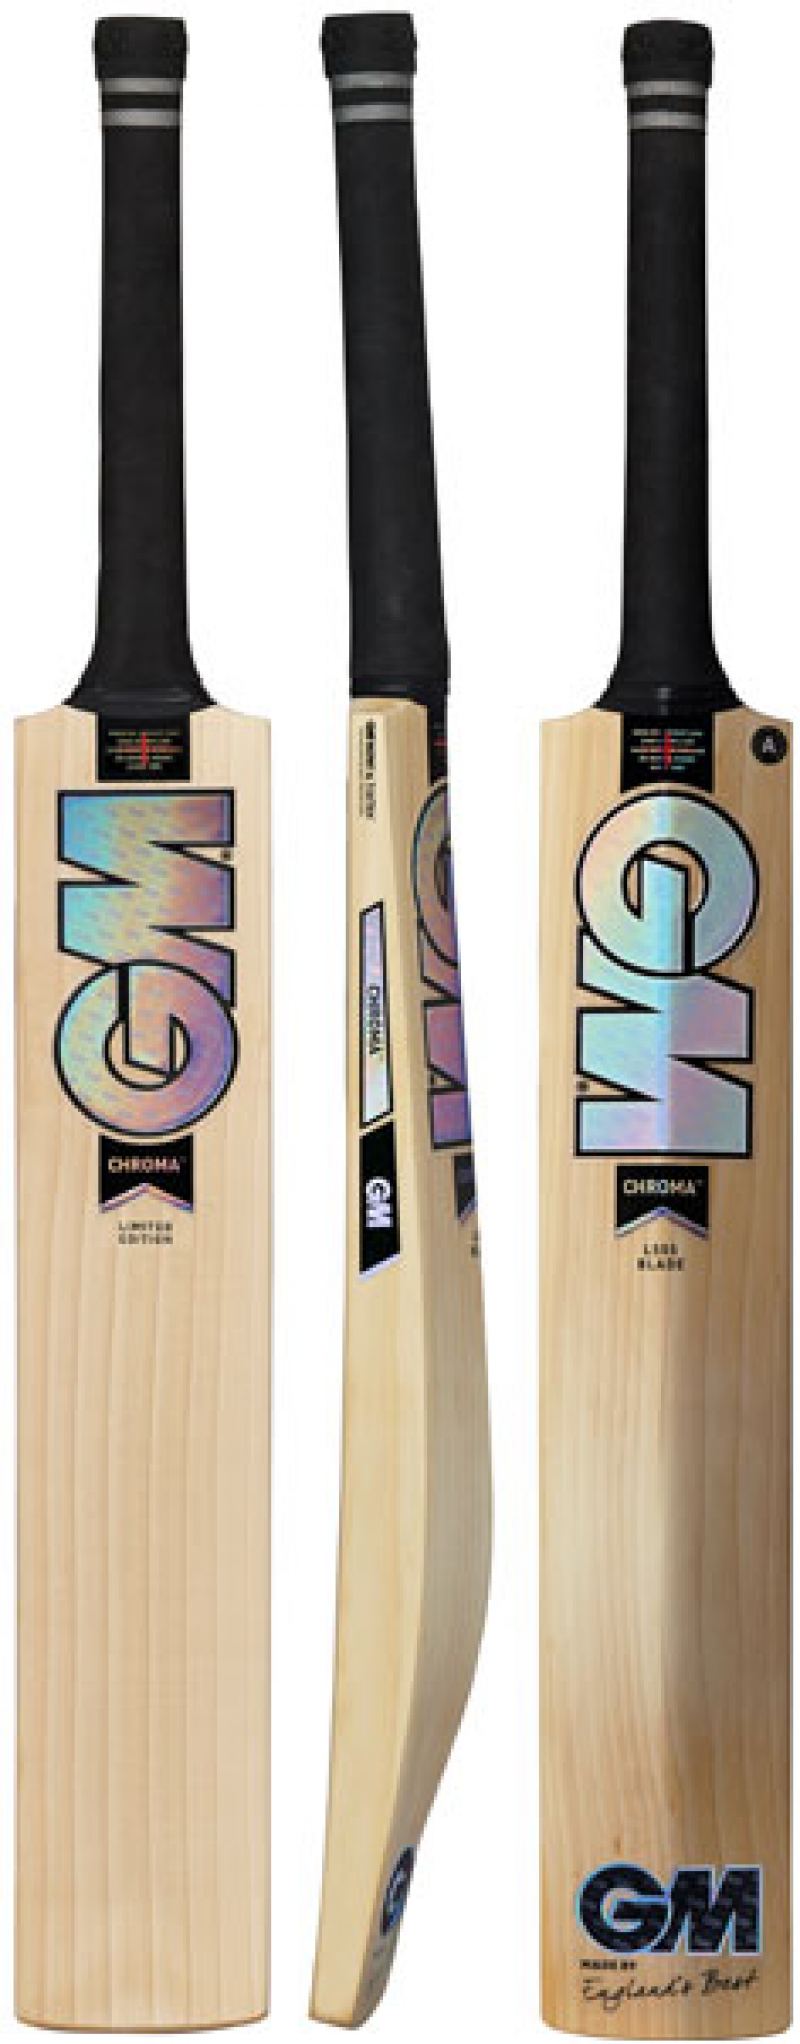 Gunn and Moore Chroma L555 DXM 909 Cricket Bat